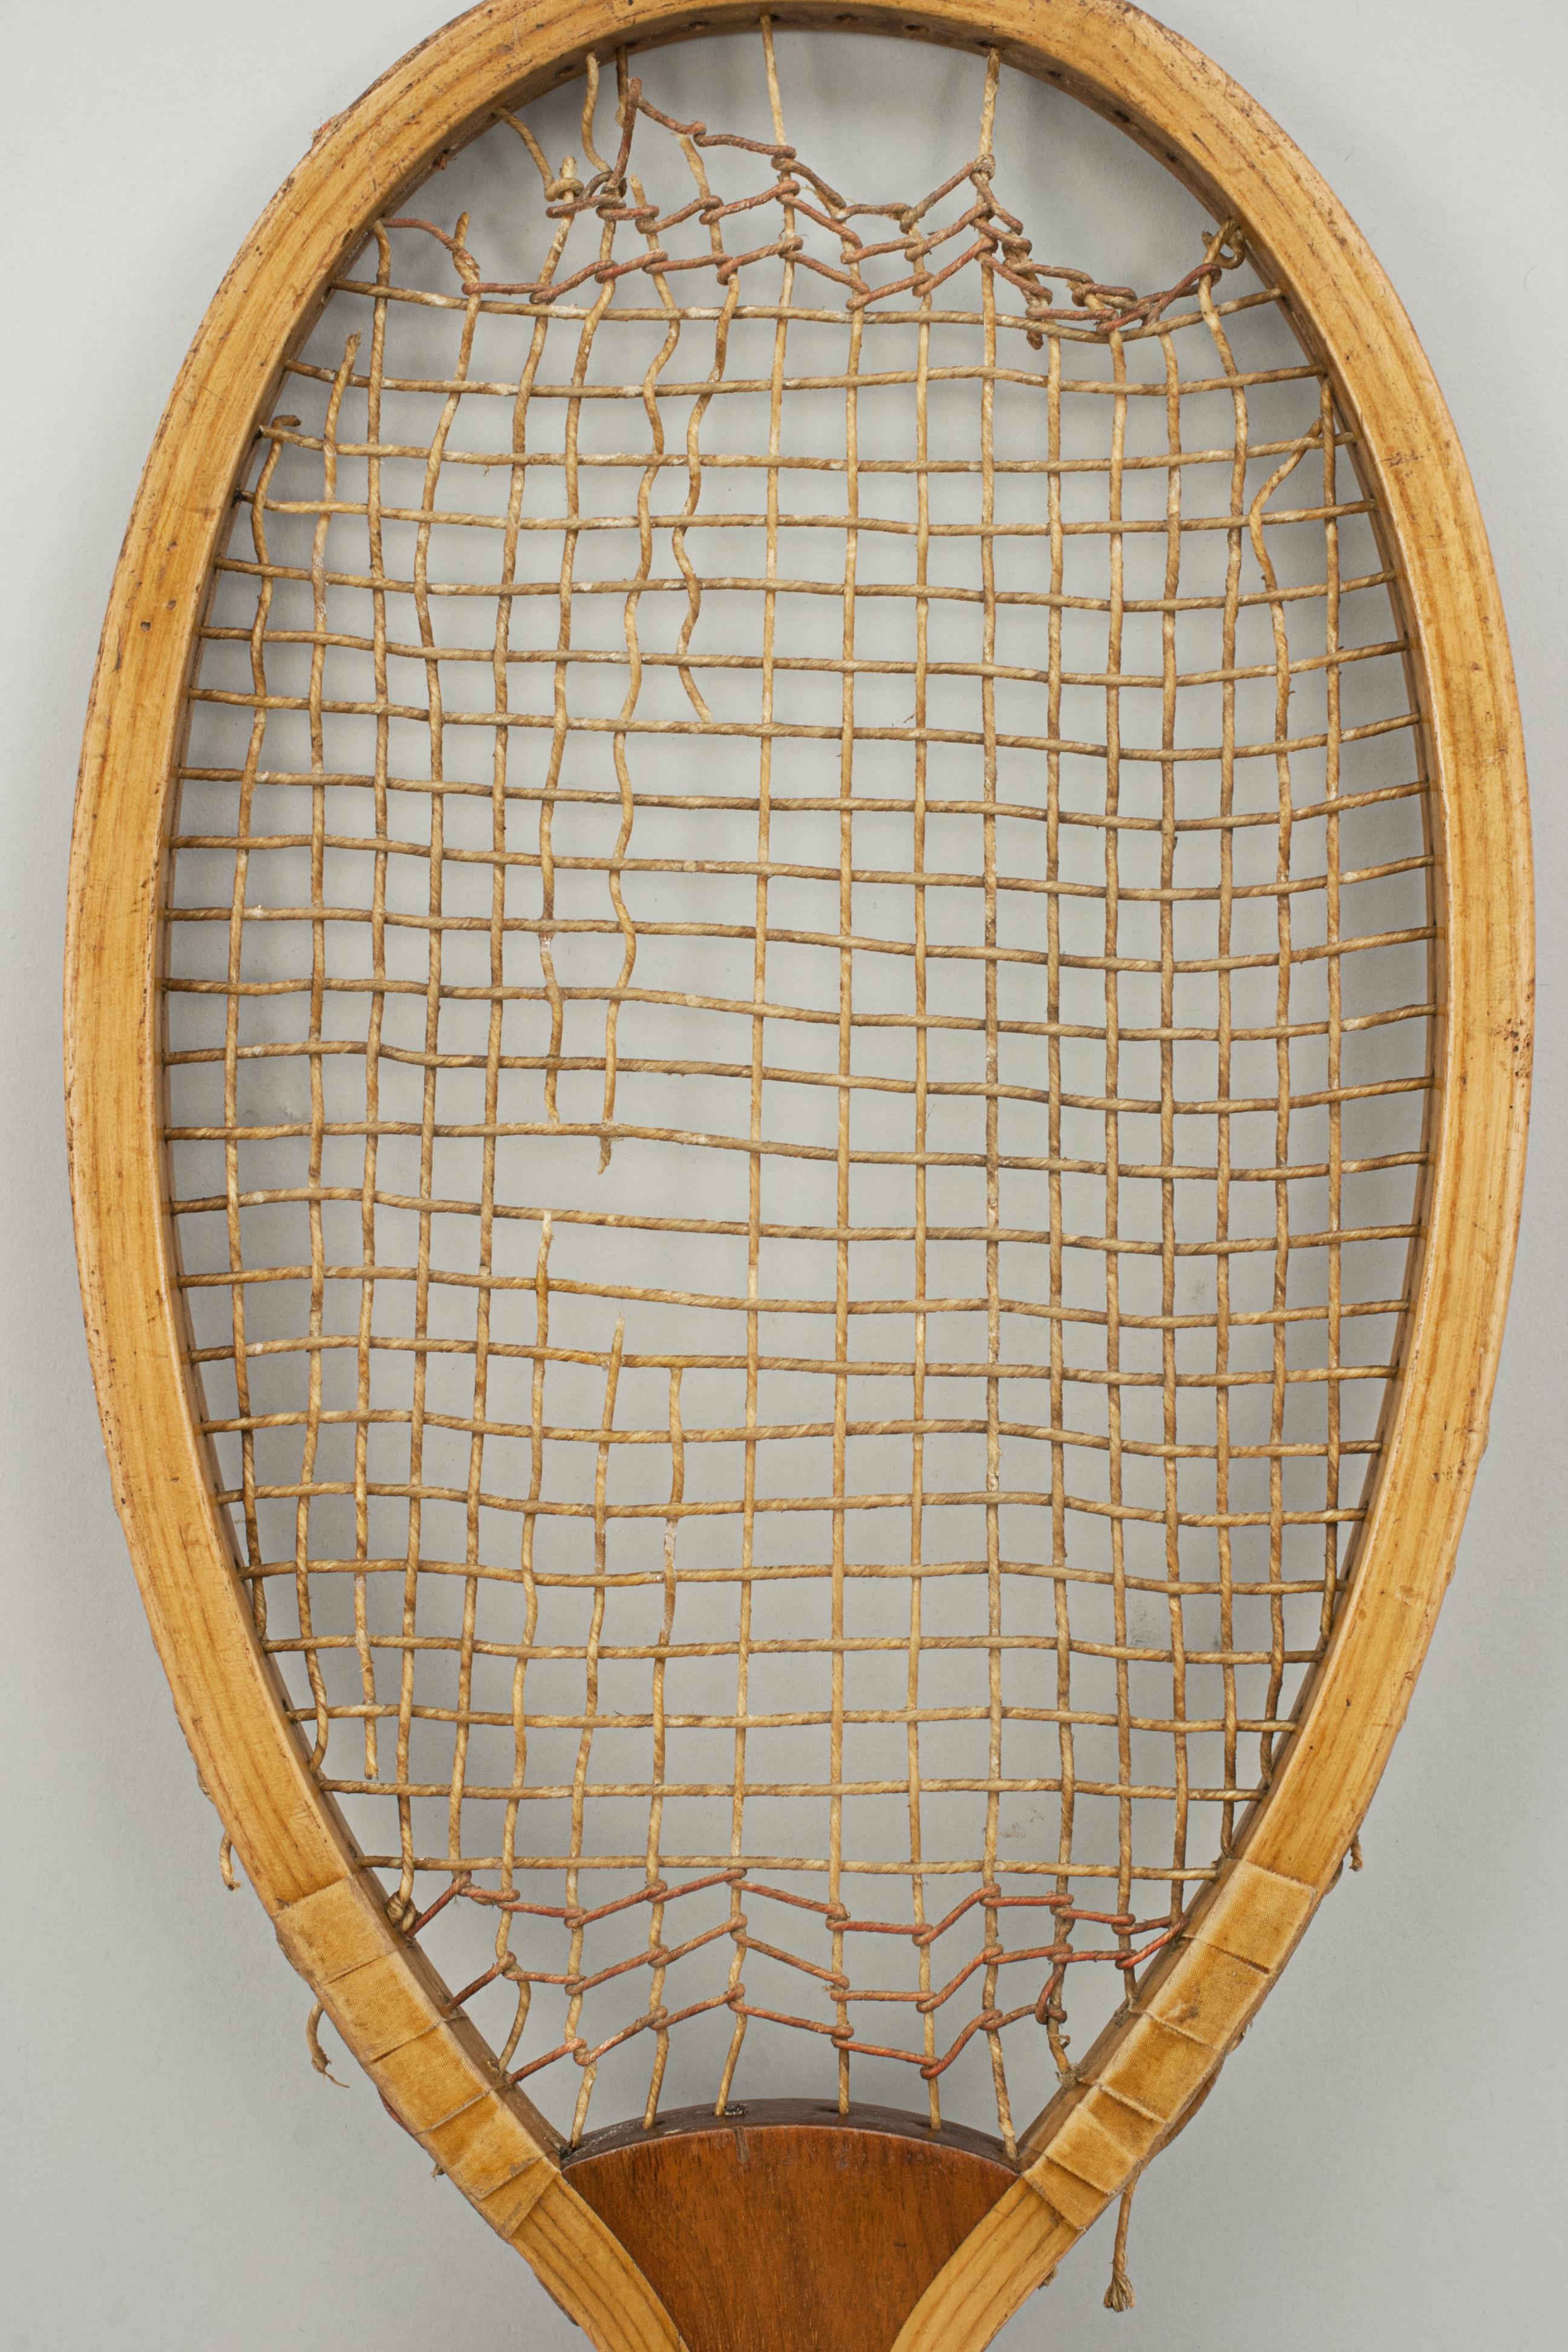 racket involving old vessel